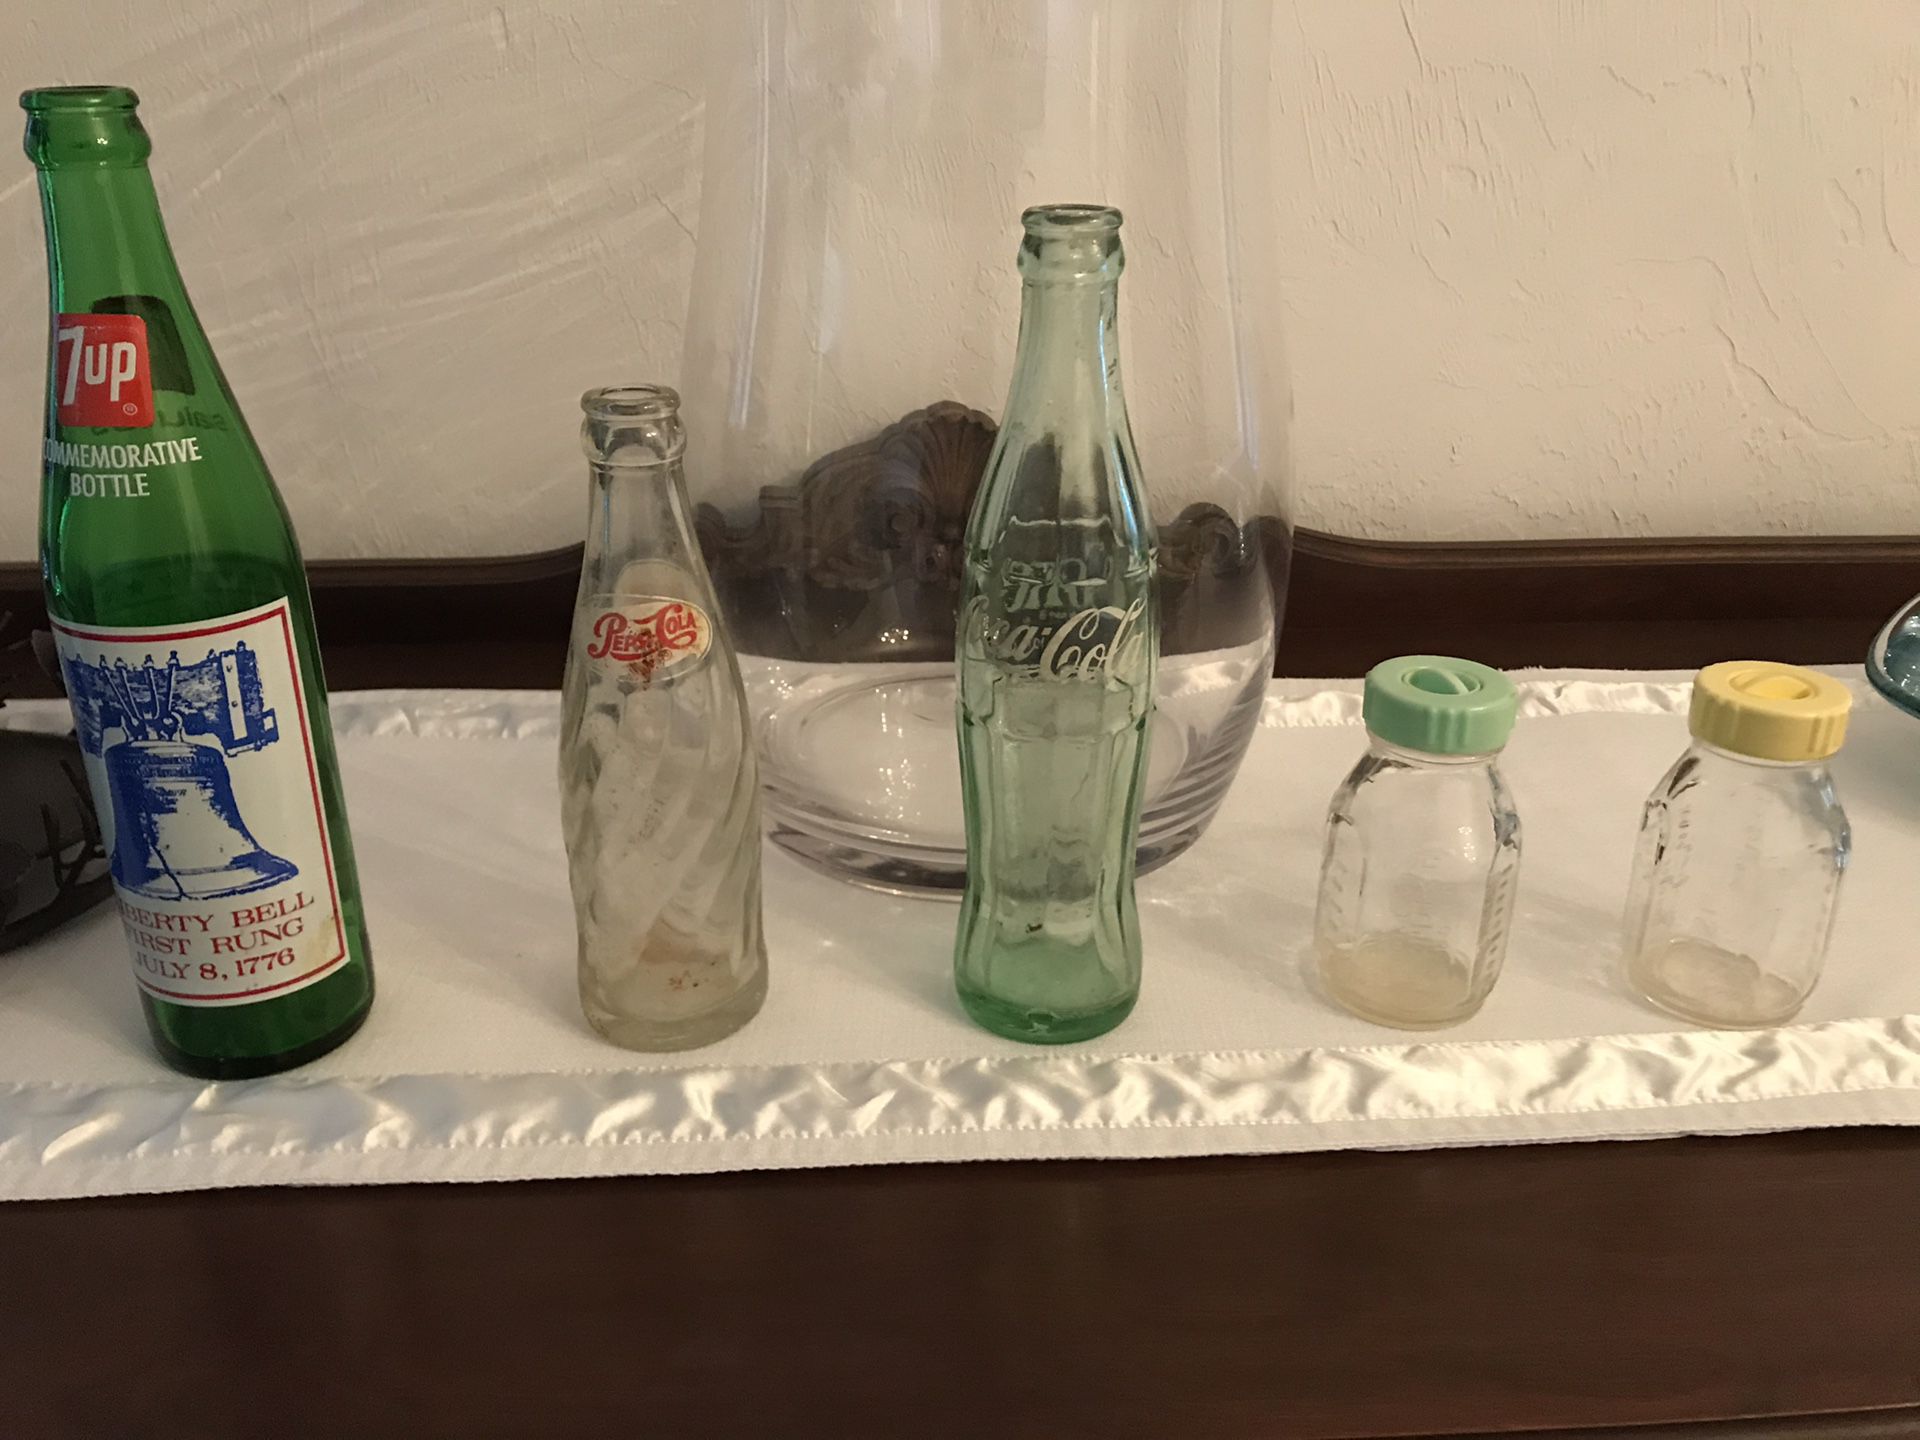 Antique bottles (7UP, Pepsi, Coke, baby bottles)